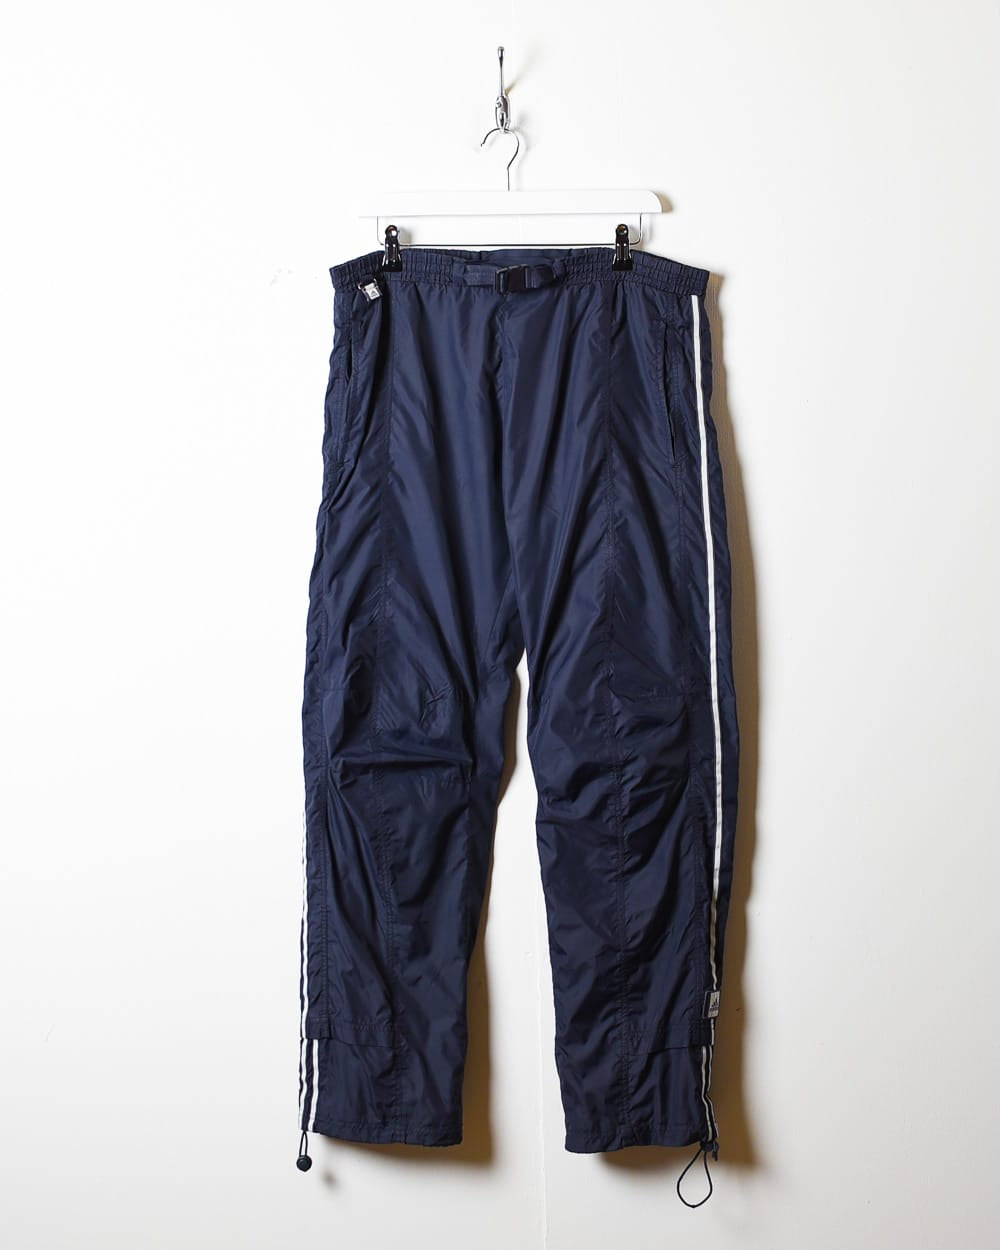 Vintage Adidas Wind Pants  Adidas pants outfit, Adidas track pants outfit,  Vintage tracksuit